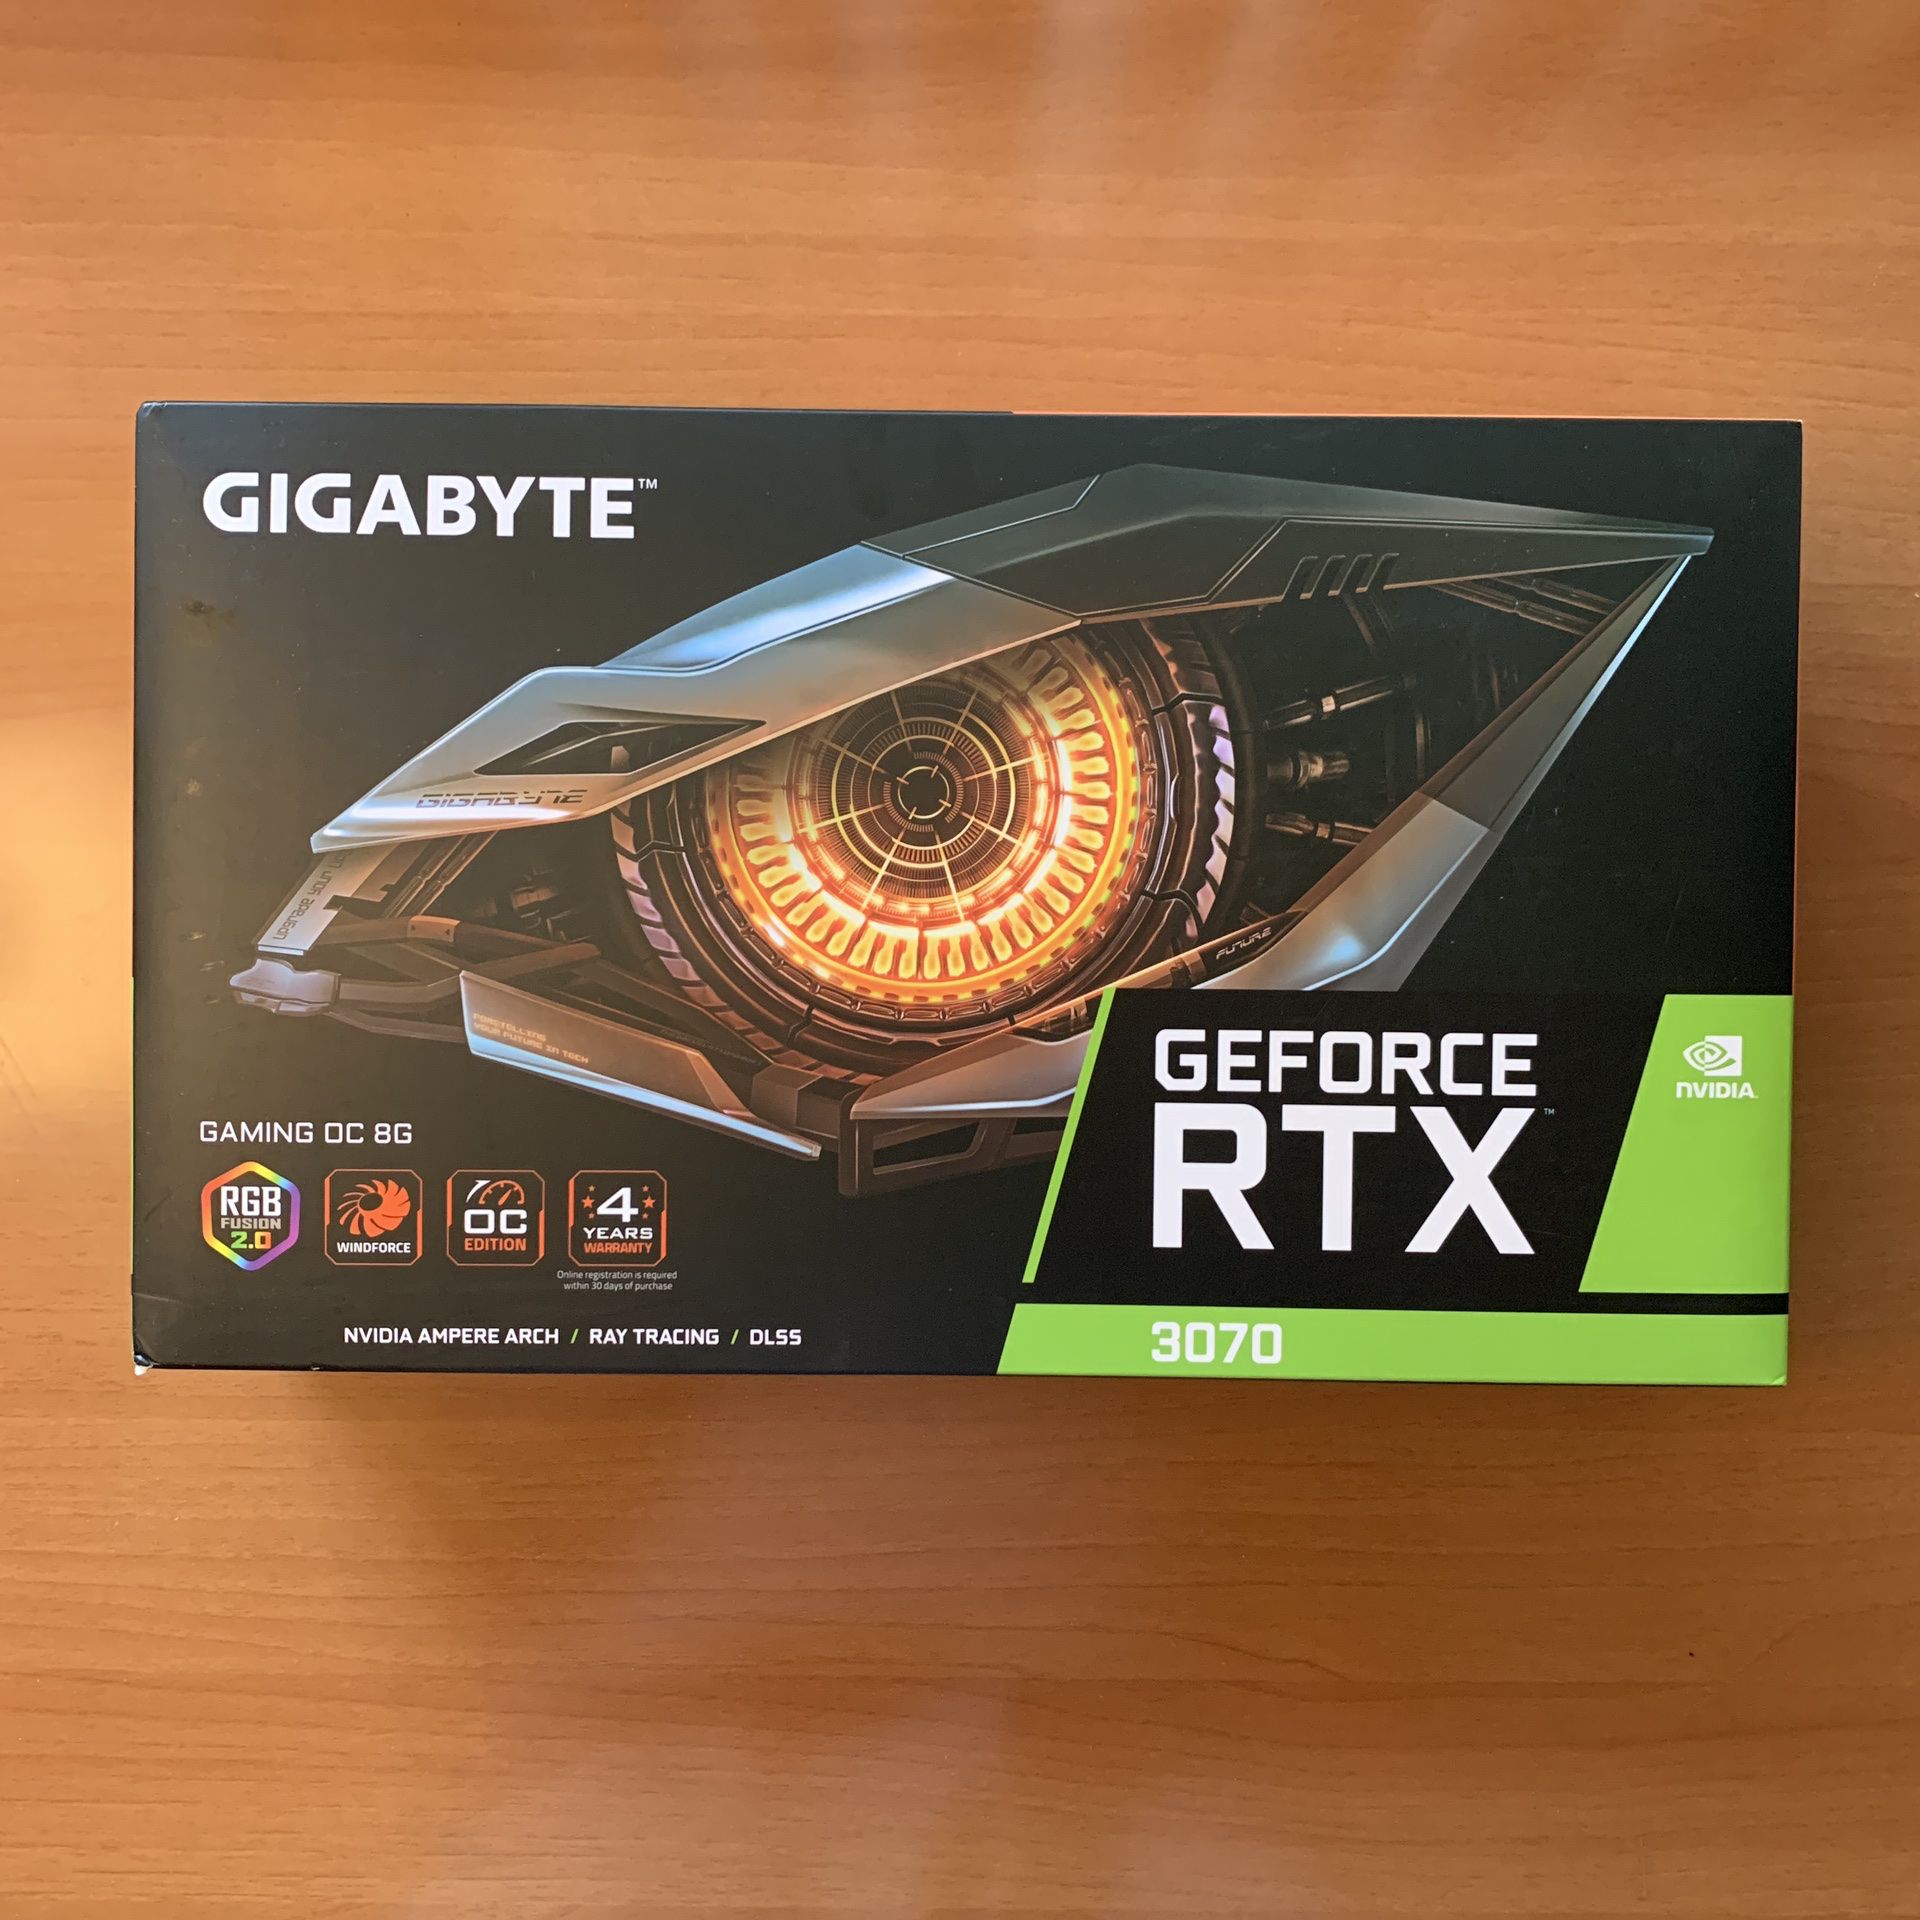 GIGABYTE - NVIDIA GeForce RTX 3070 Gaming OC 8GB GDDR6 Graphics Card